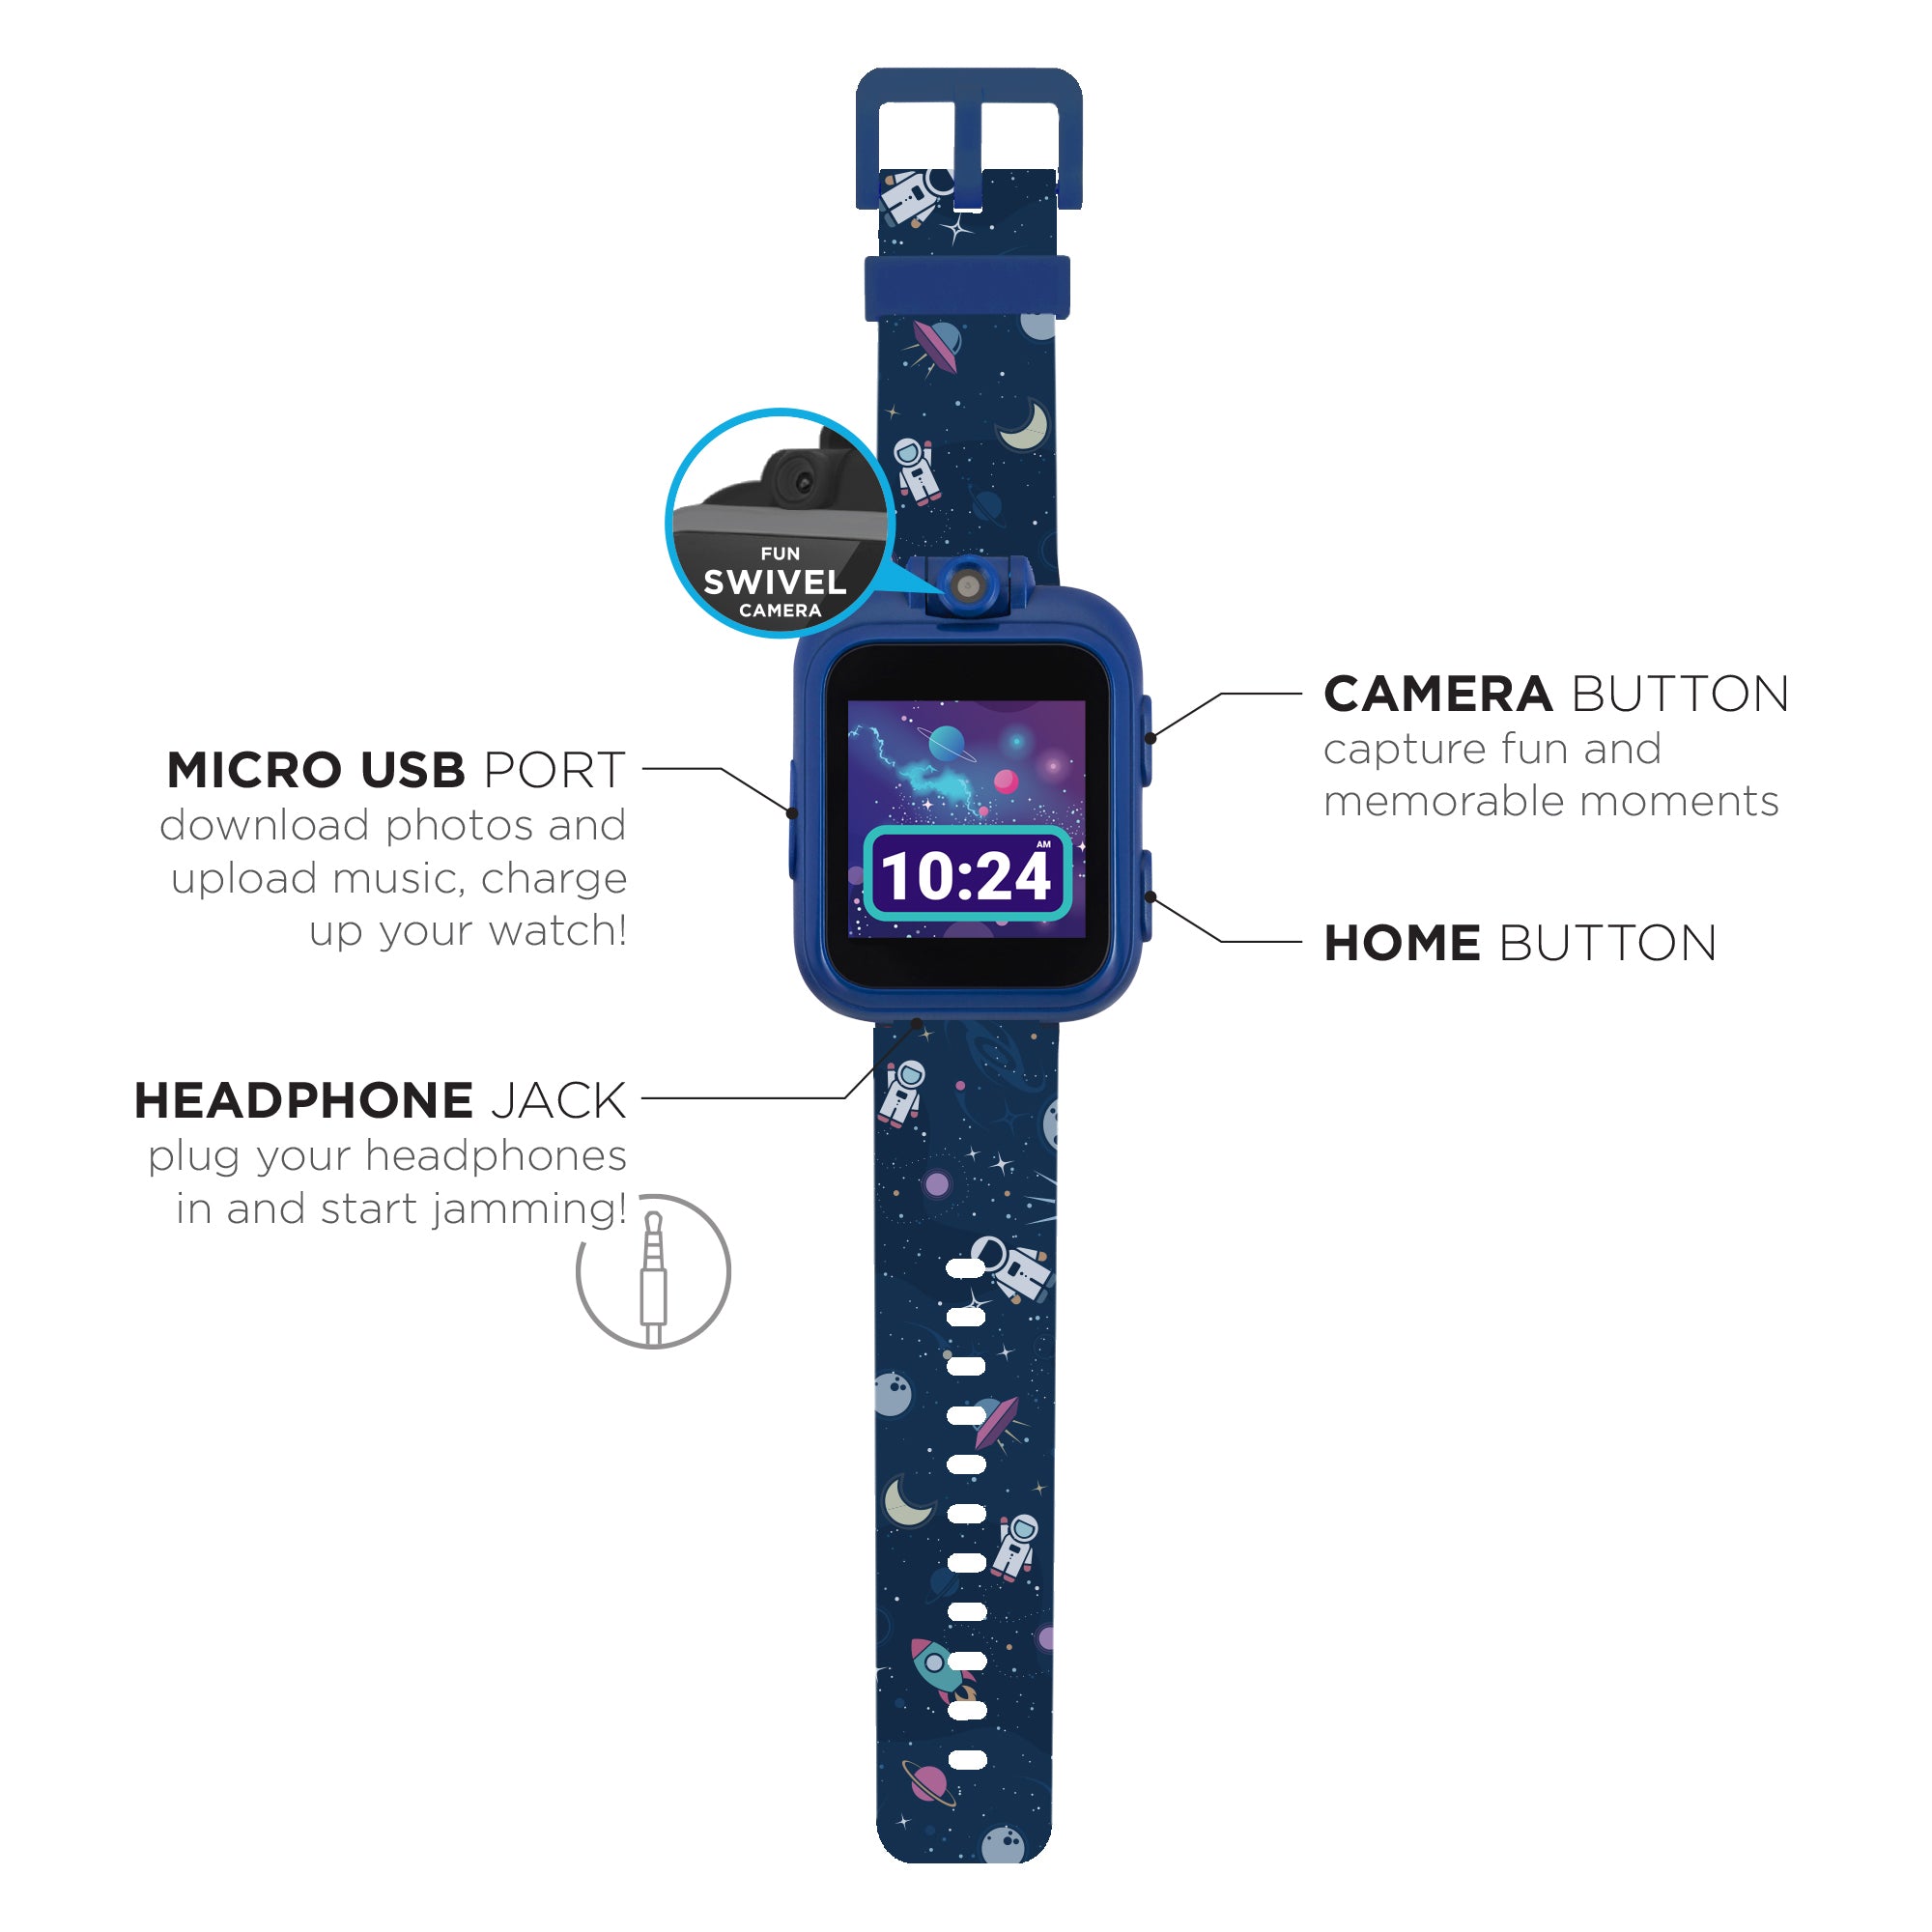 PlayZoom 2 Kids Smartwatch with Headphones: Spaceman Print affordable smart watch with headphones